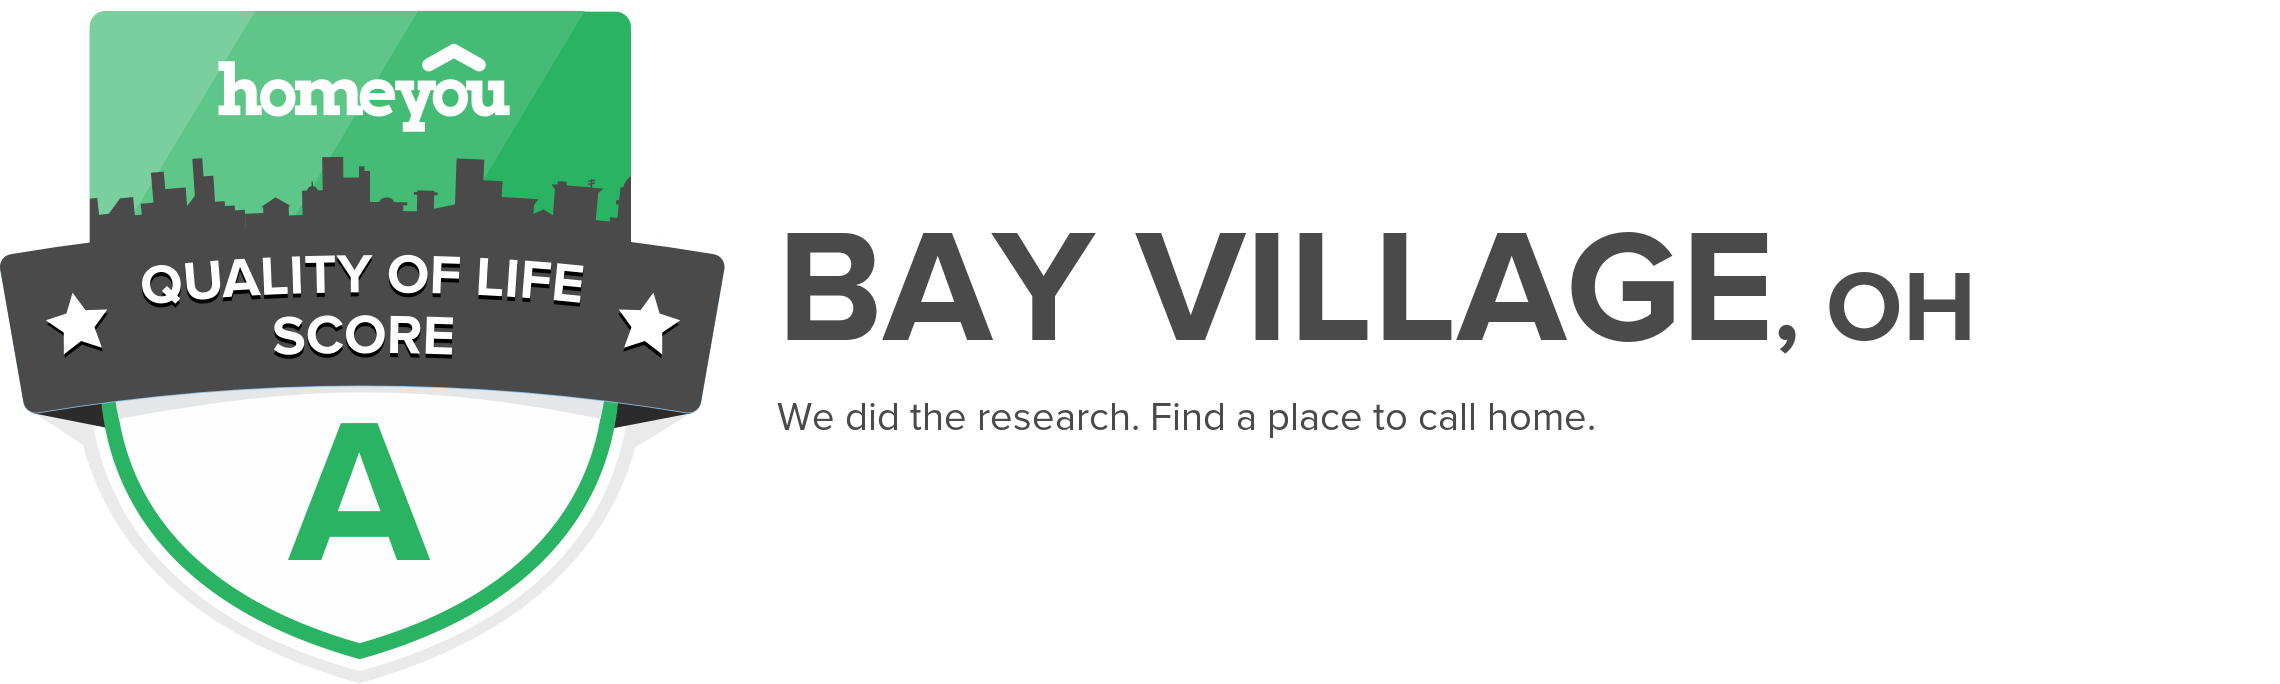 Bay Village, OH